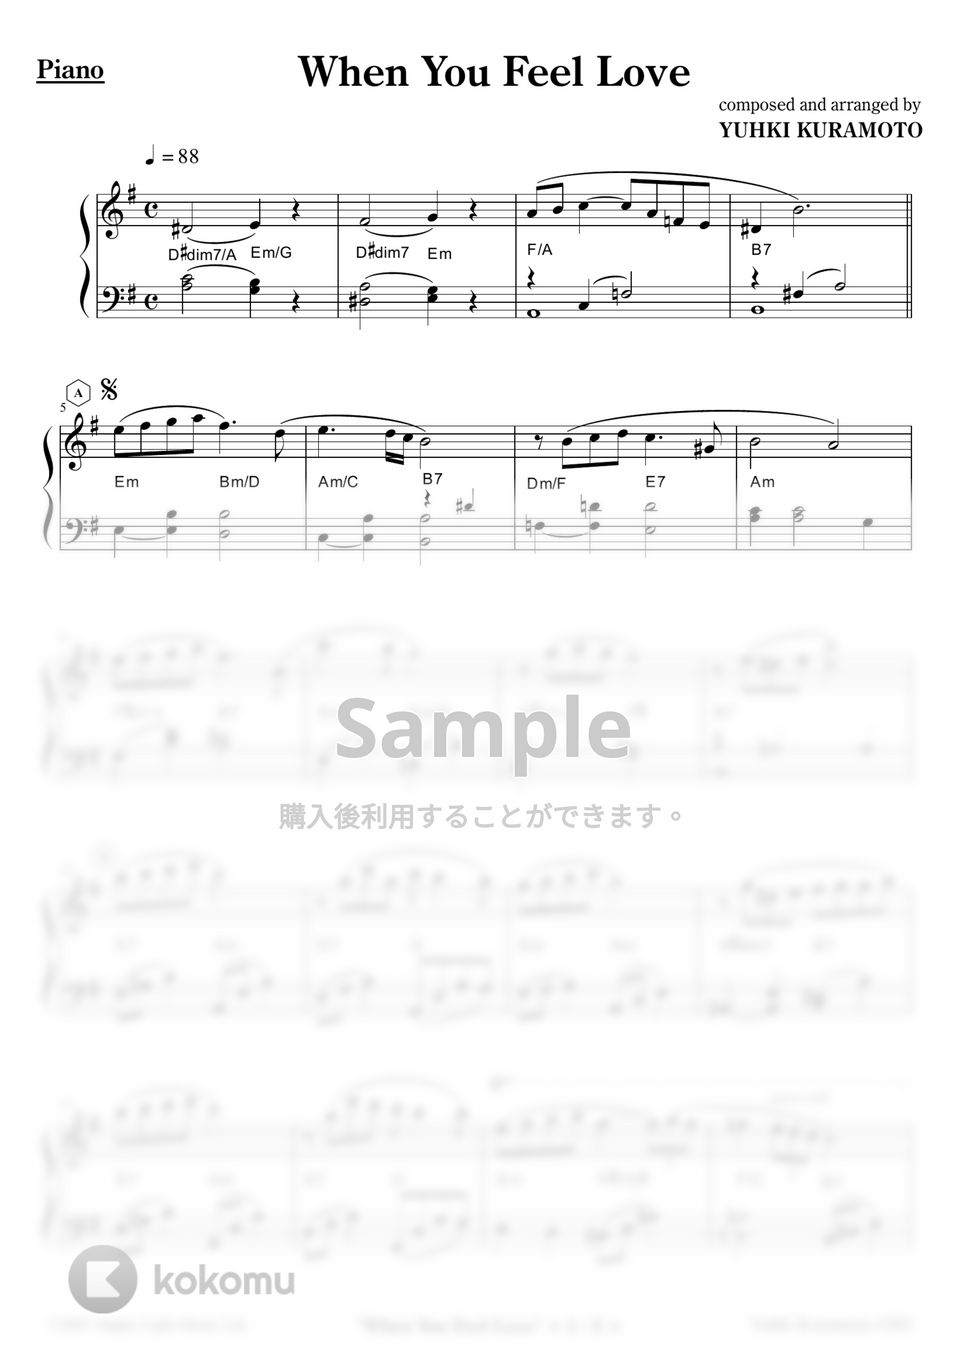 Yuhki Kuramoto - When You Feel Love (Easy Ver.) by Yuhki Kuramoto